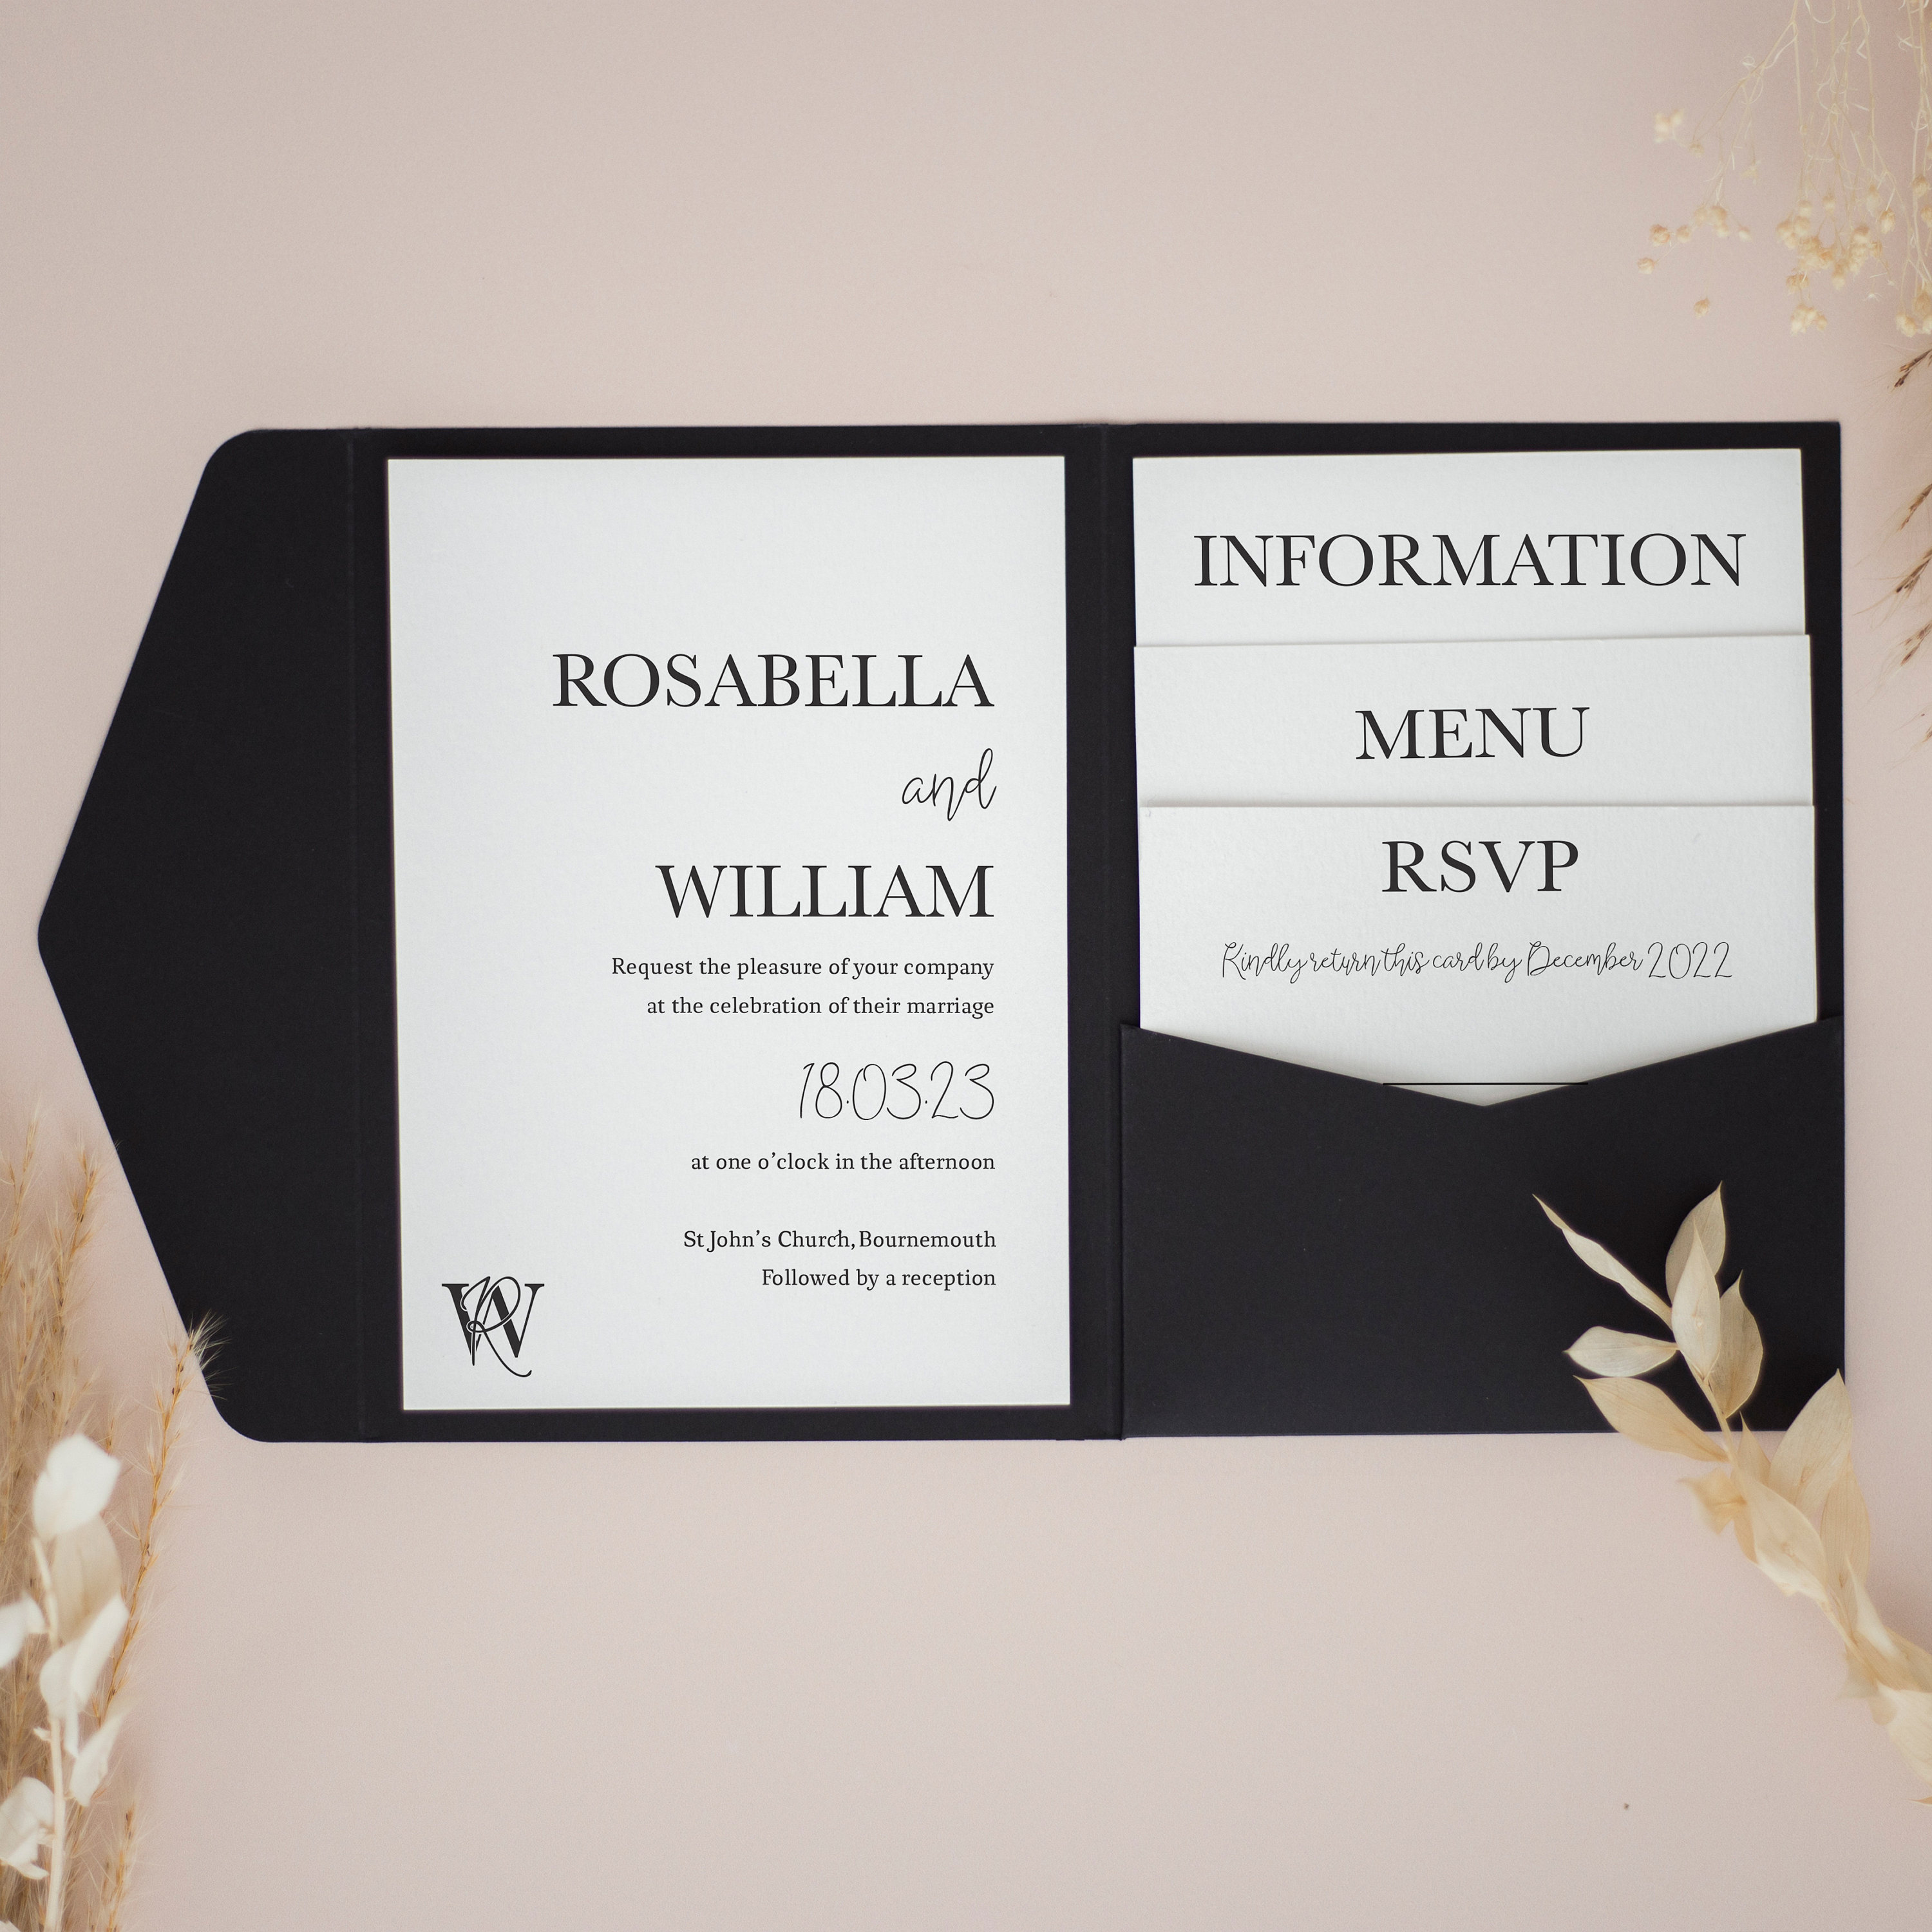 Printed Pristine White Envelopes C6, 5x7 or C5, Invitation or RSVP Envelopes  Colorplan, Printing Guest Addressing 